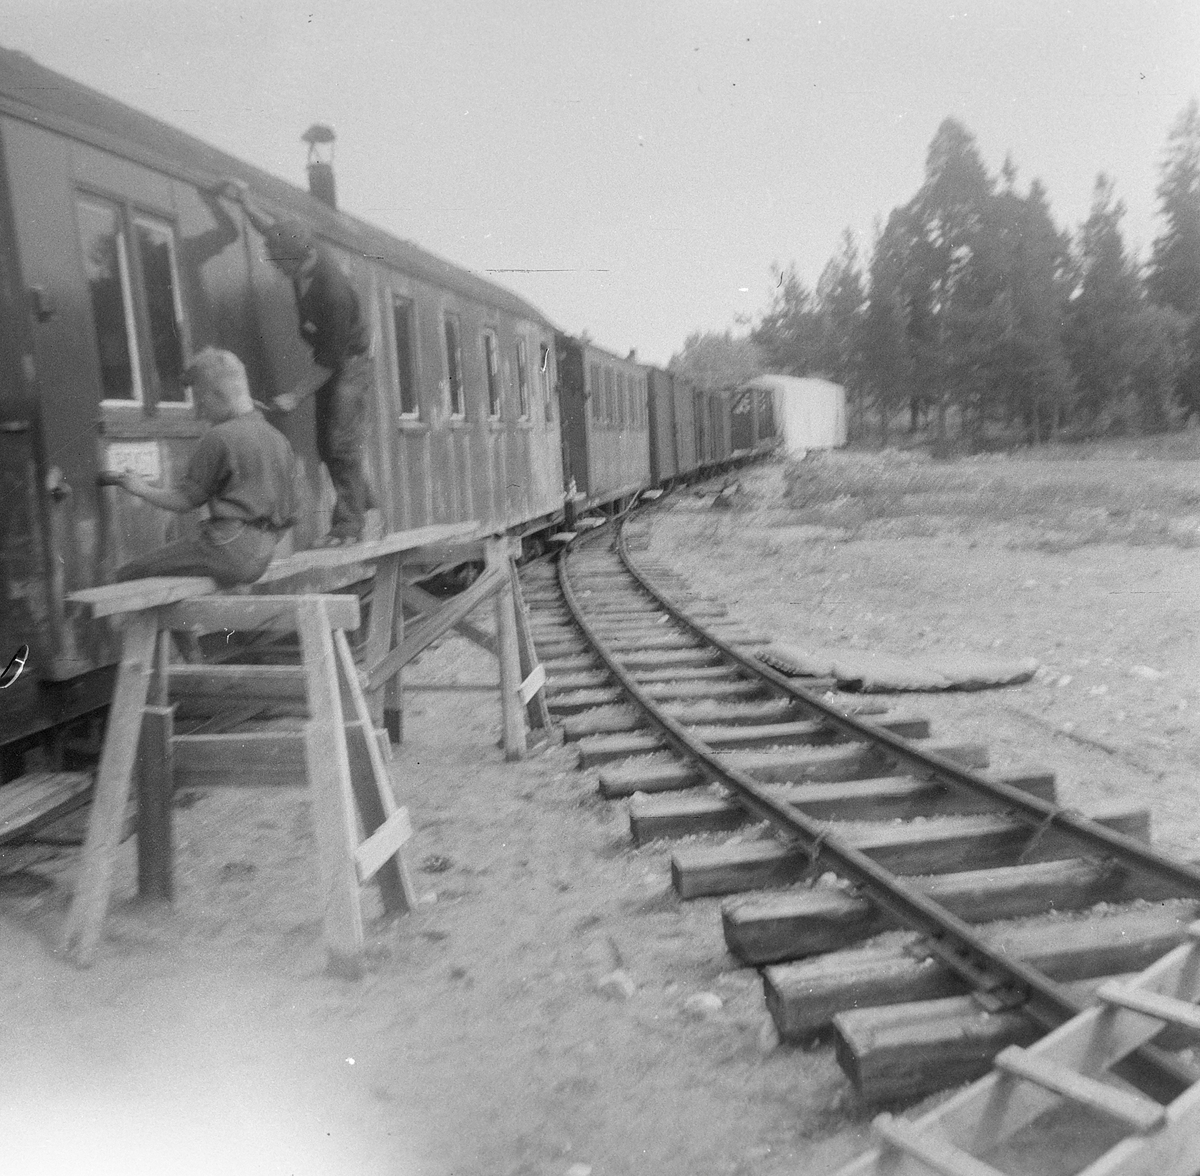 Dugnadsarbeid på museumsbanen Urskog-Hølandsbanens rullende materiell ved Sørumsand Verksted